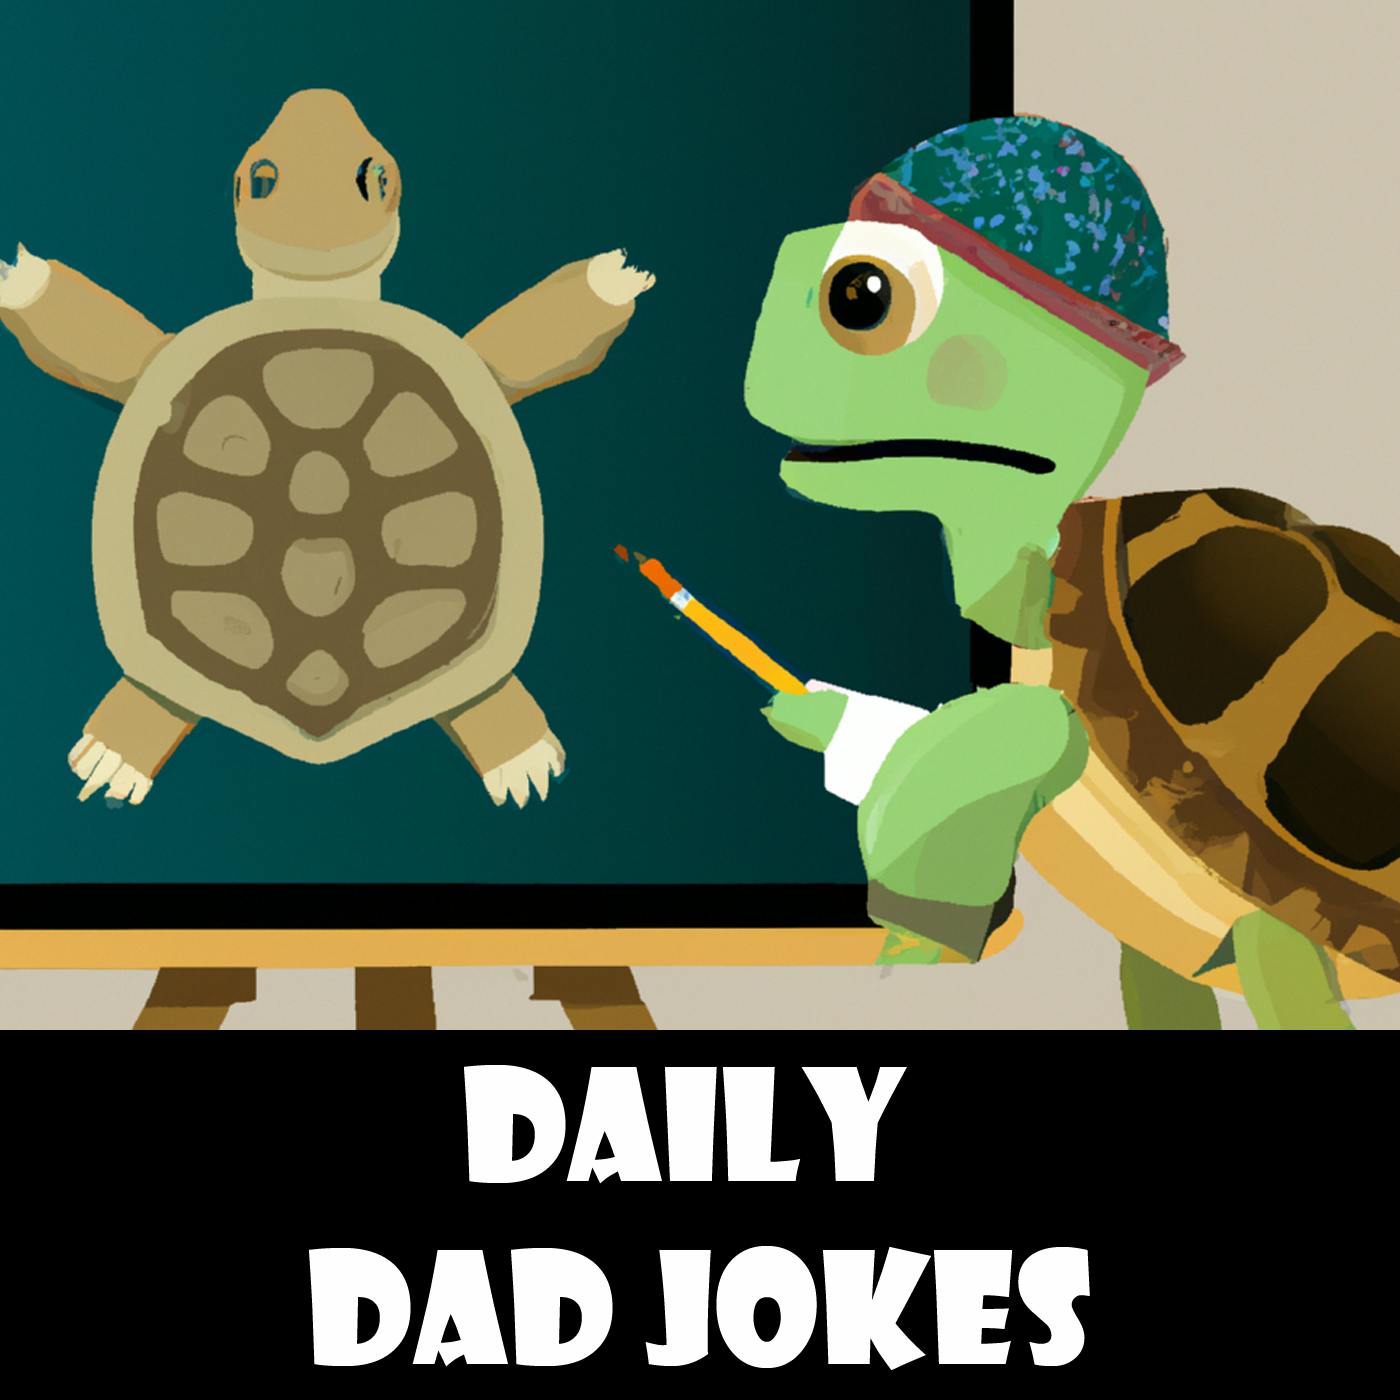 I had a great teacher at my last school, called Mr Turtle. | + 15 more jokes | 02 Dec 2022